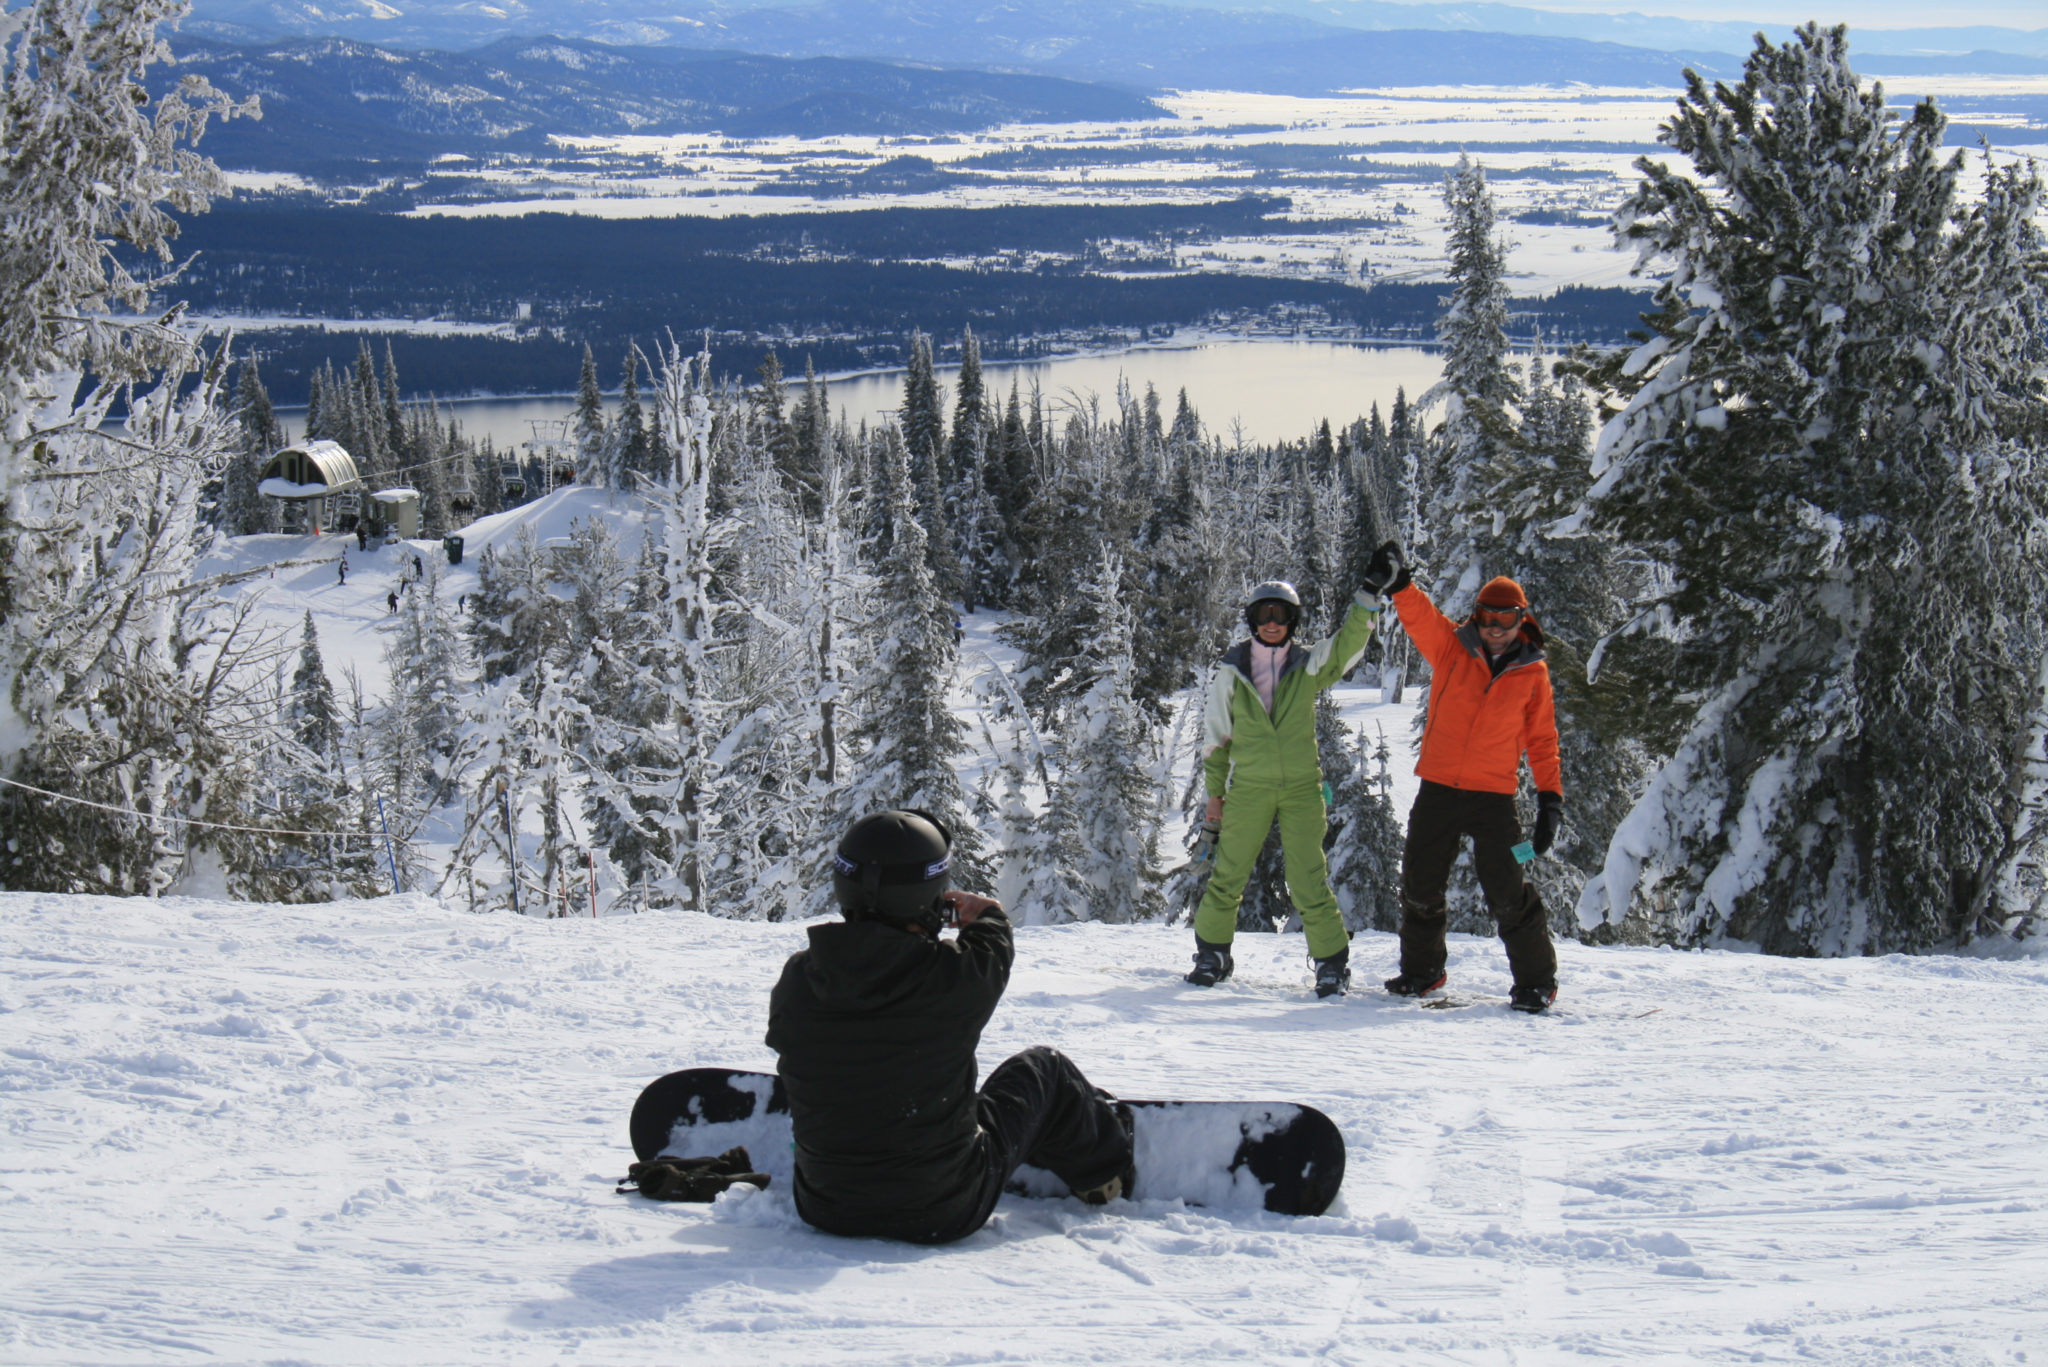 Snowboarder photographs friends at summit.